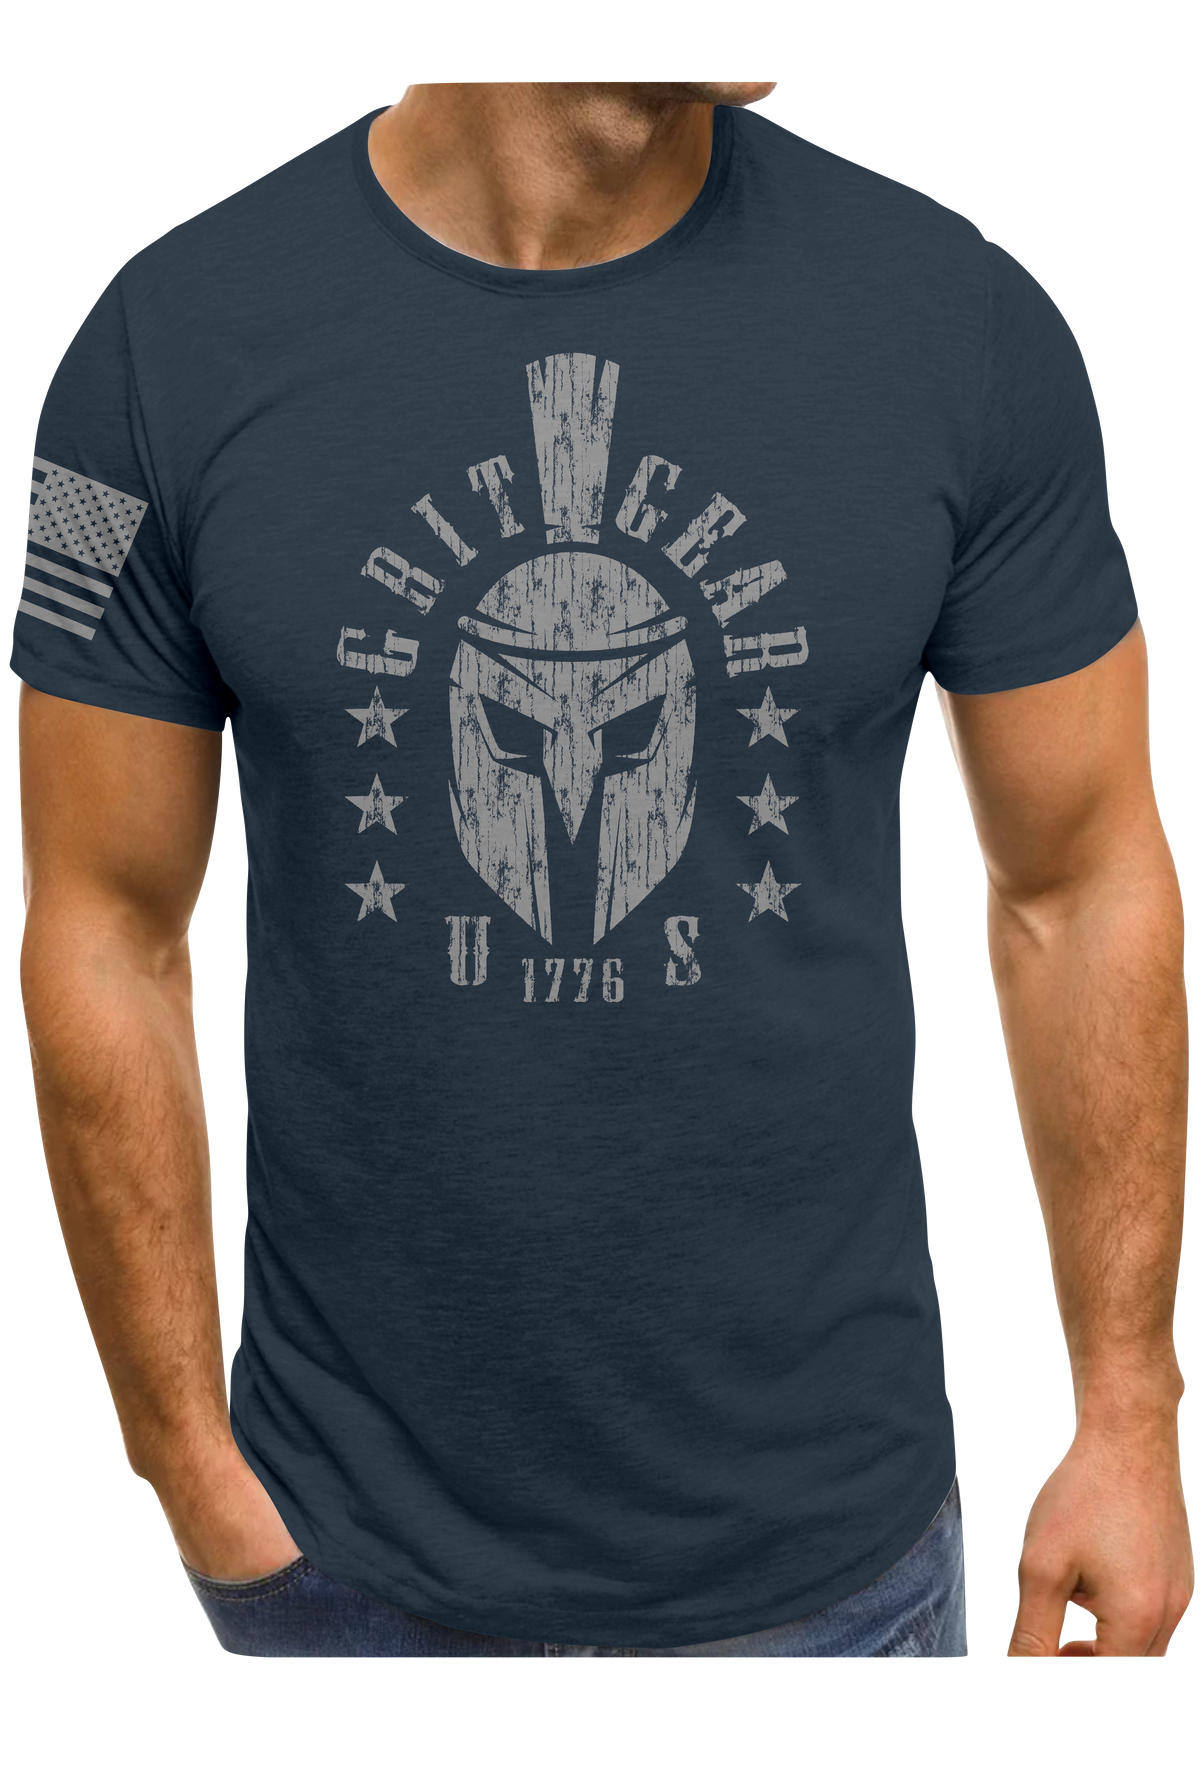 Grit City USA T-Shirt